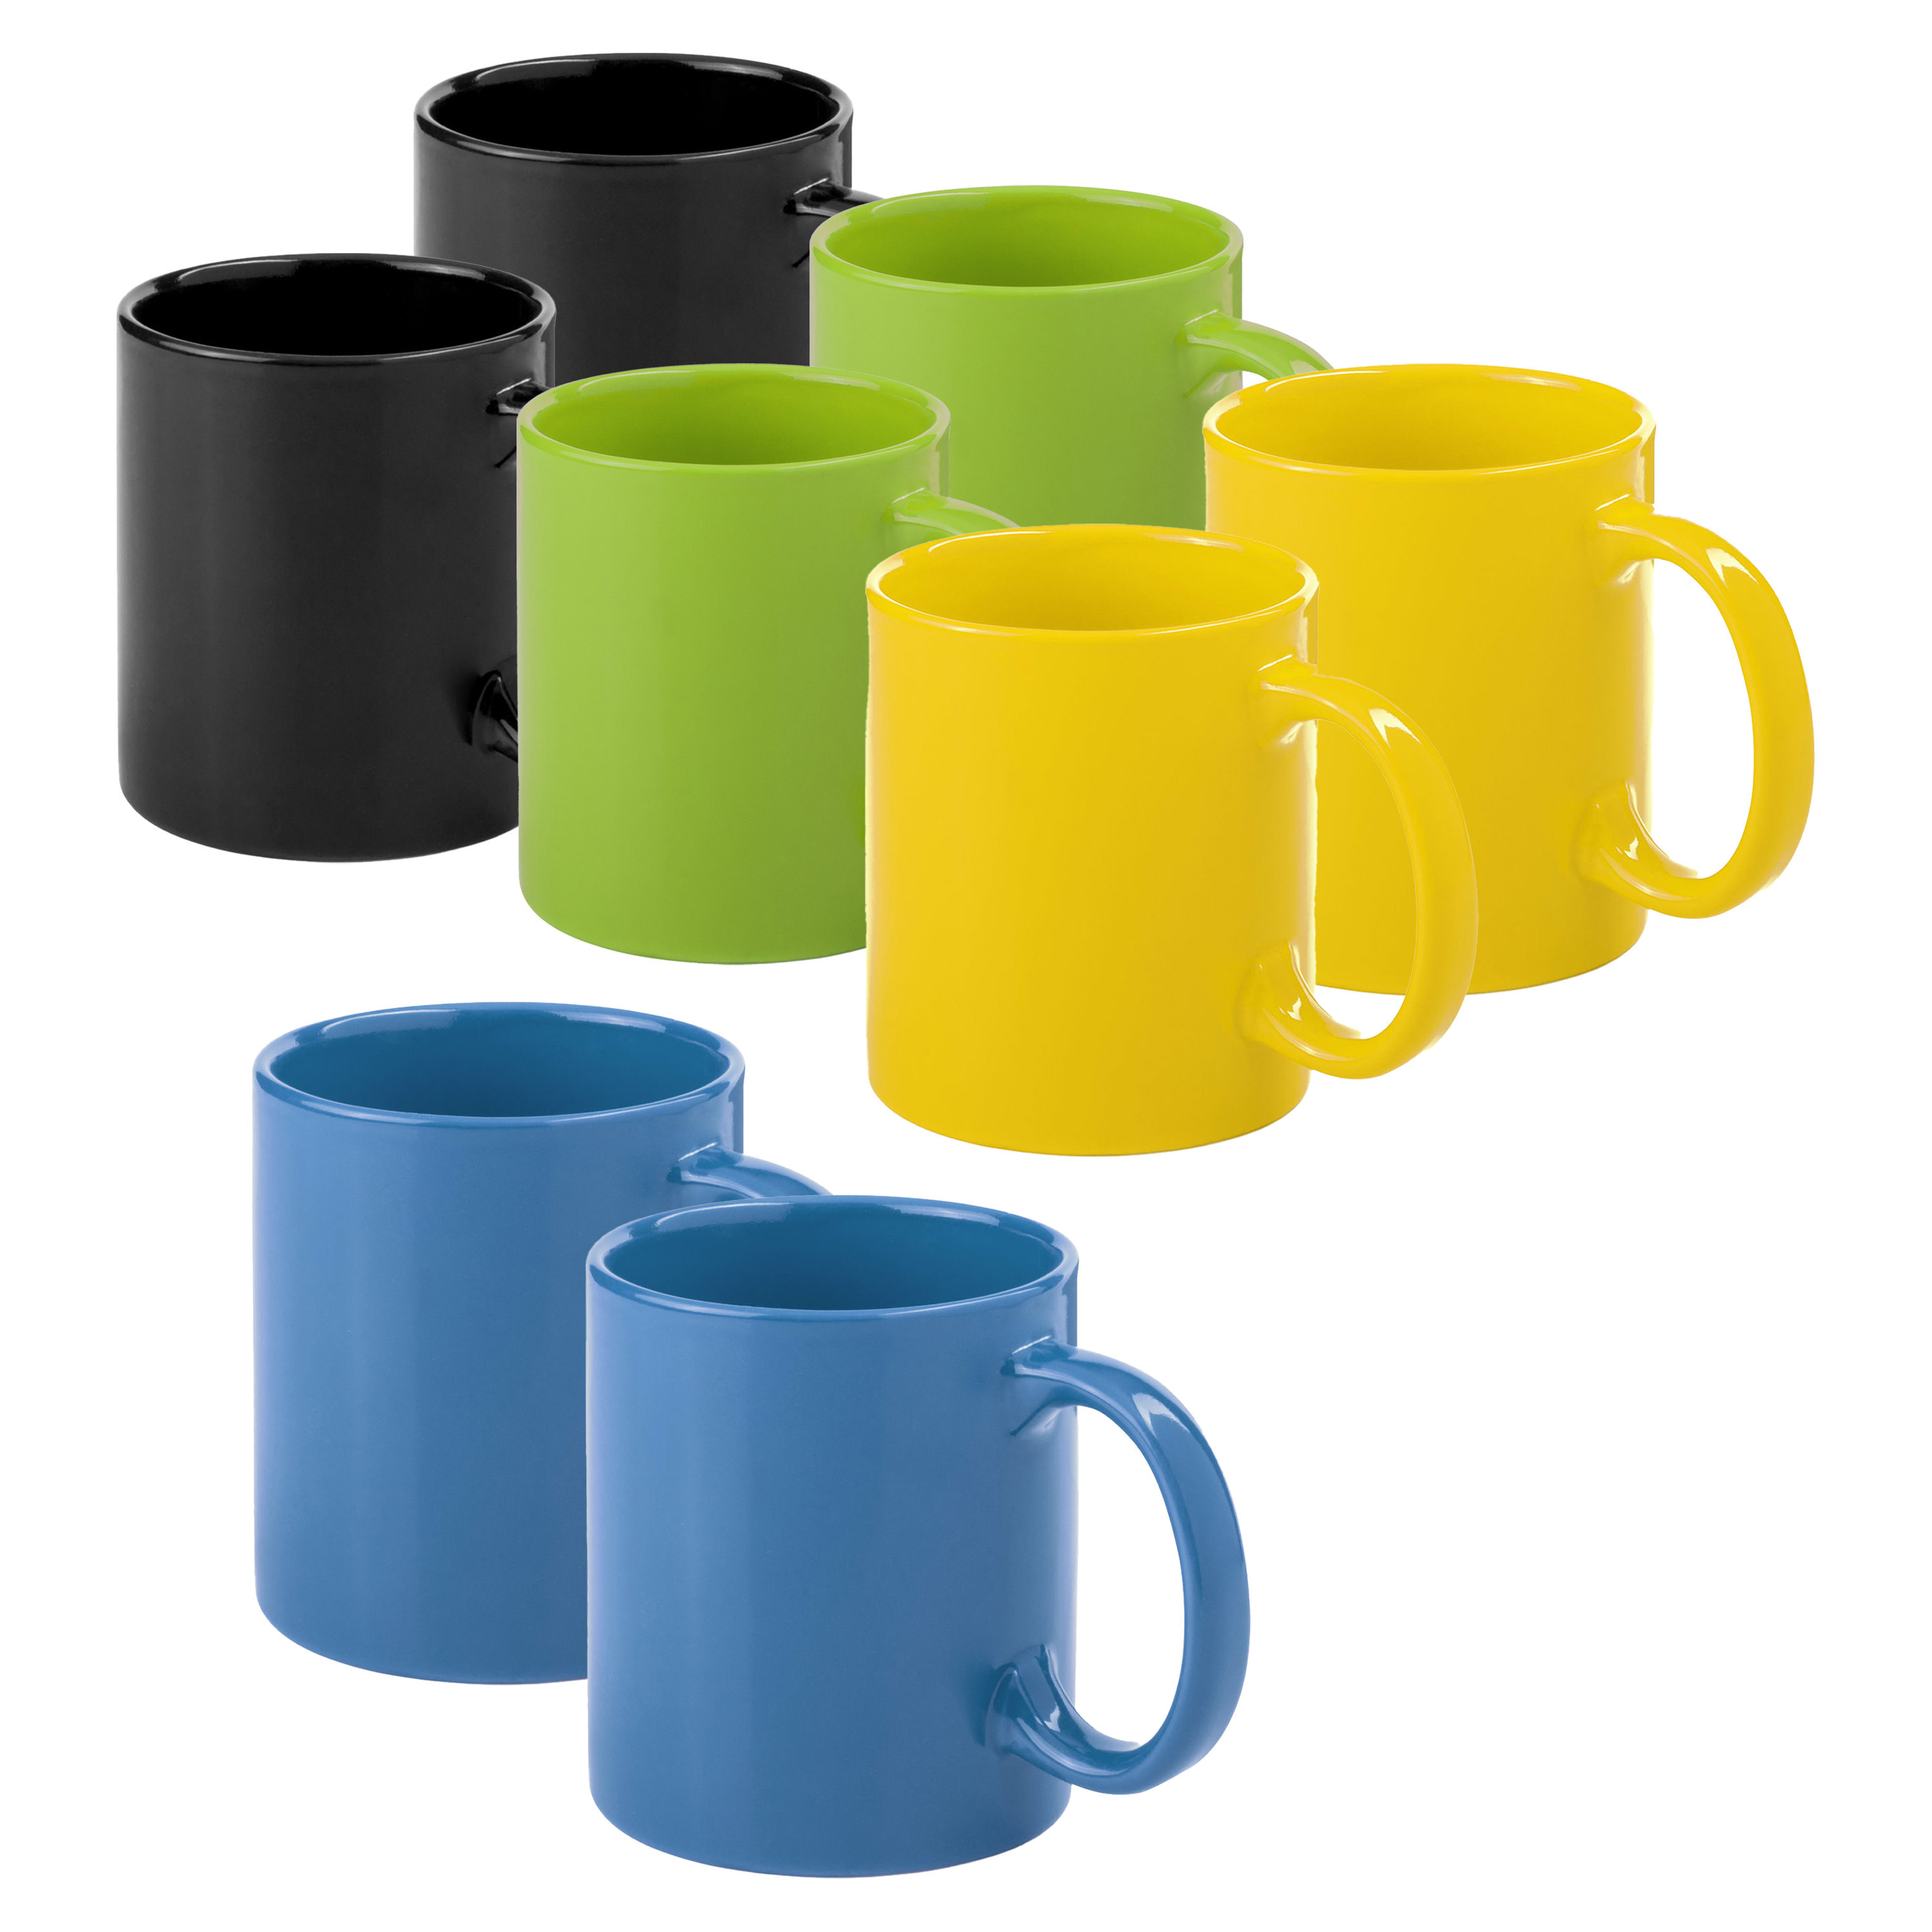 Koffie mokken/drinkbekers Auxerre - 8x - keramiek - geel/groen/blauw/zwart - 370 ml -